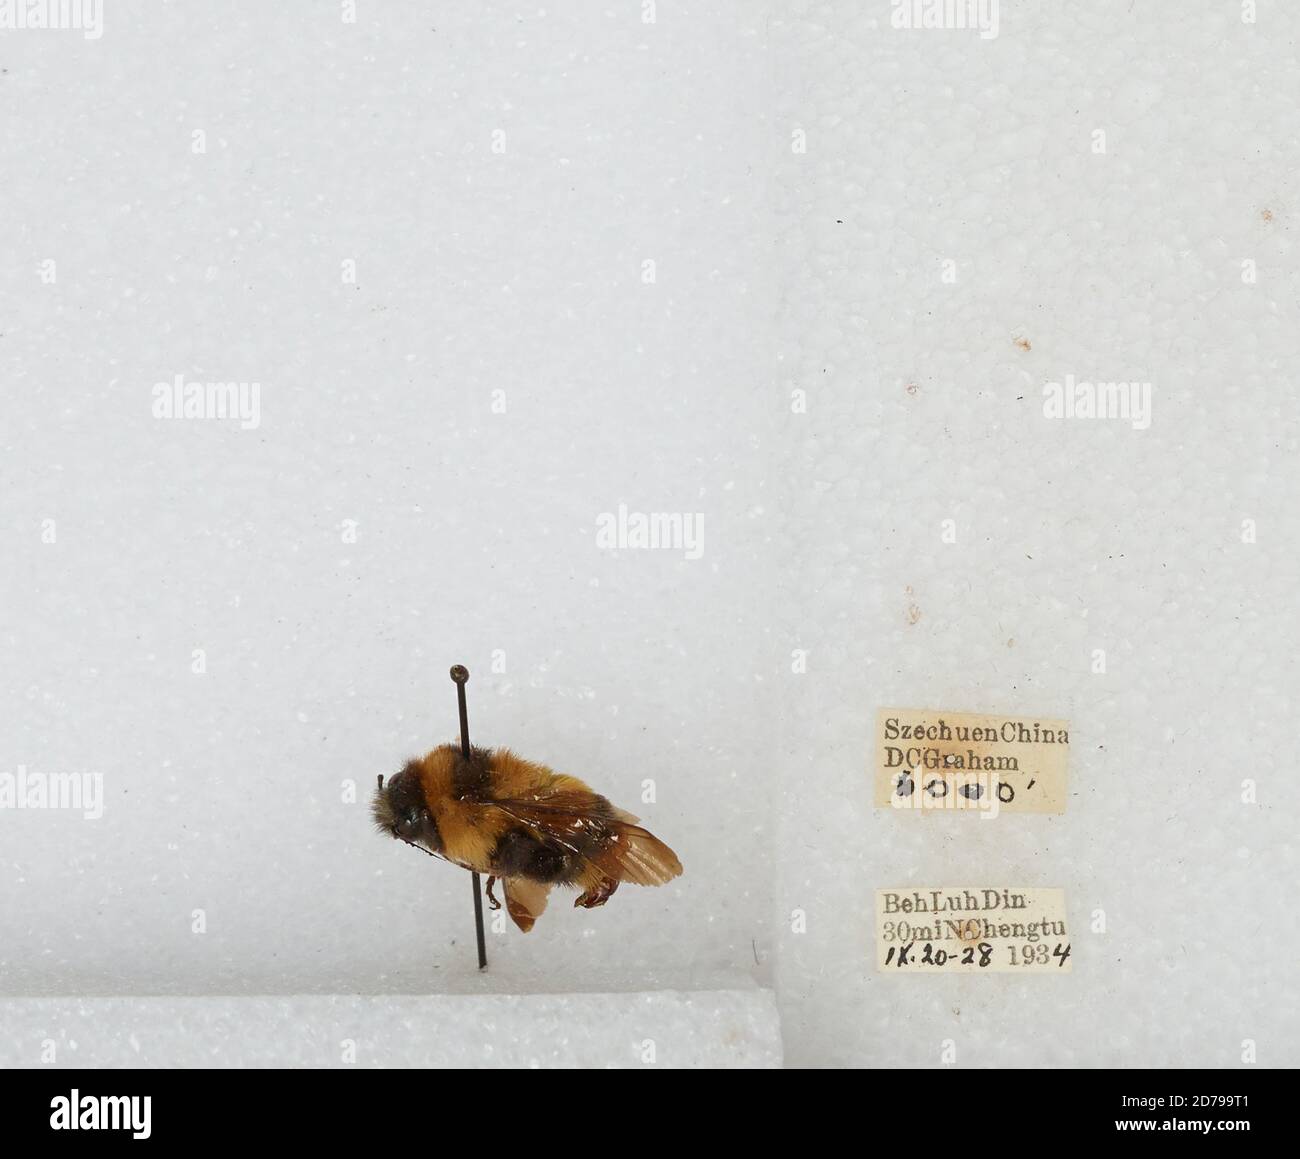 Beh Luh Din 30 mi N Chengdu, Sichuan, China, Bombus sp., Animalia, Arthropoda, Insecta, Hymenoptera, Apidae, Apinae Stock Photo